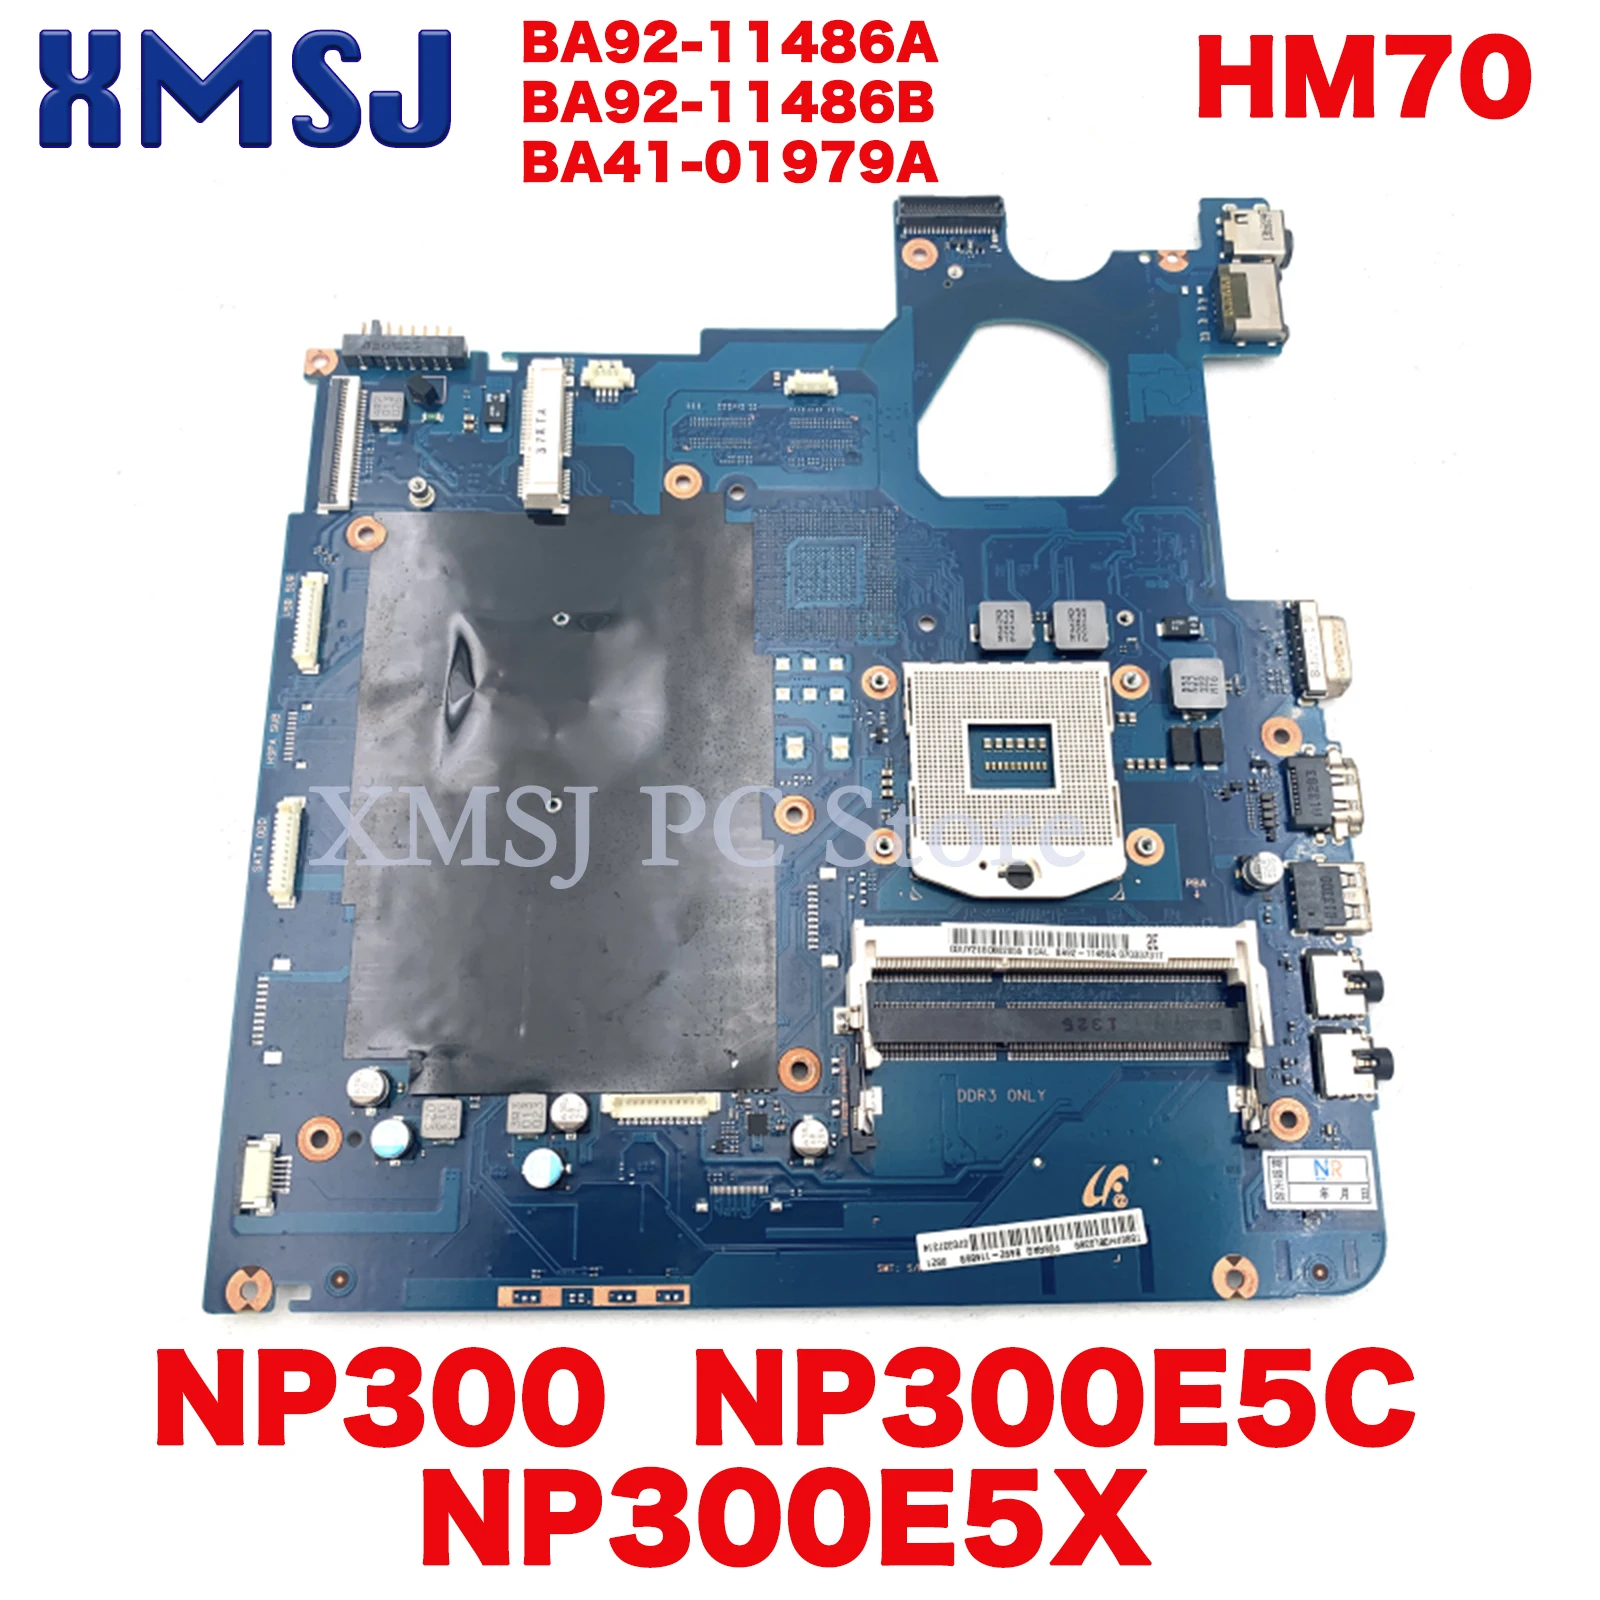 XMSJ BA92-11486A BA92-11486B BA41-01979A For Samsung NP300 NP300E5C NP300E5X laptop motherboard SCALA3-15 17CRV HM70